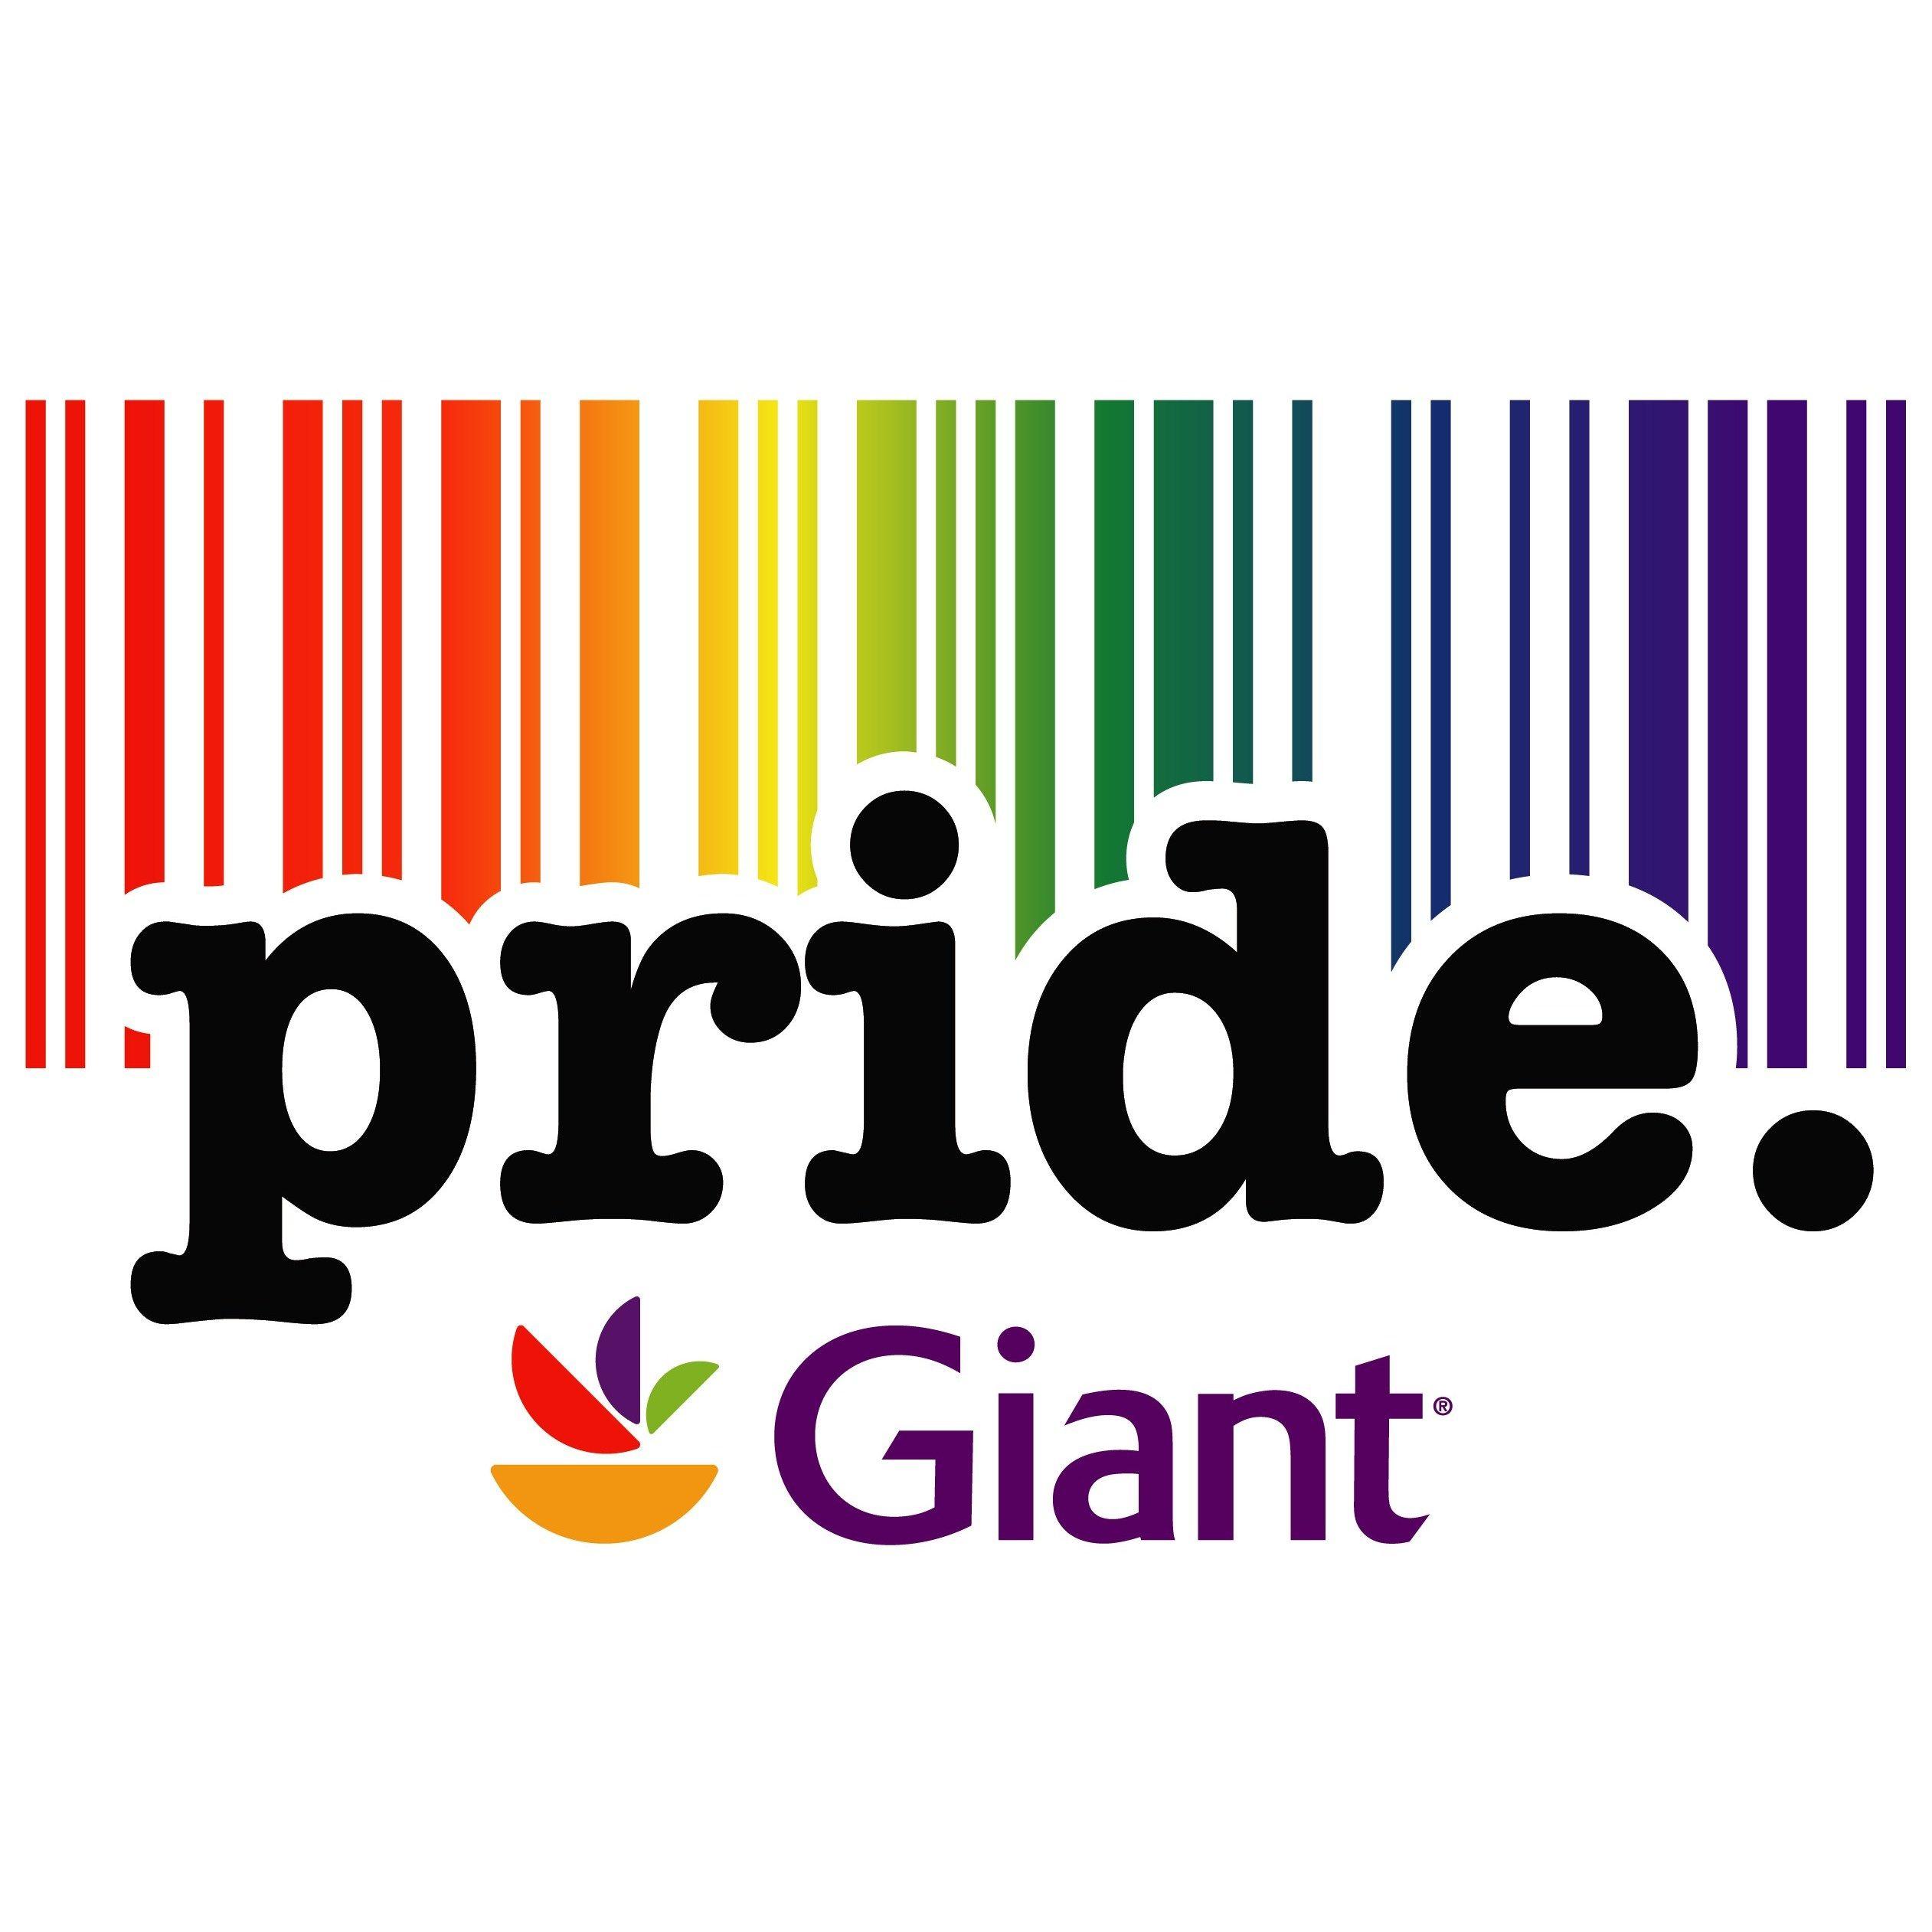 LGBTQ Logo - Giant Food Celebrates the LGBTQ Community with a new Rainbow logo